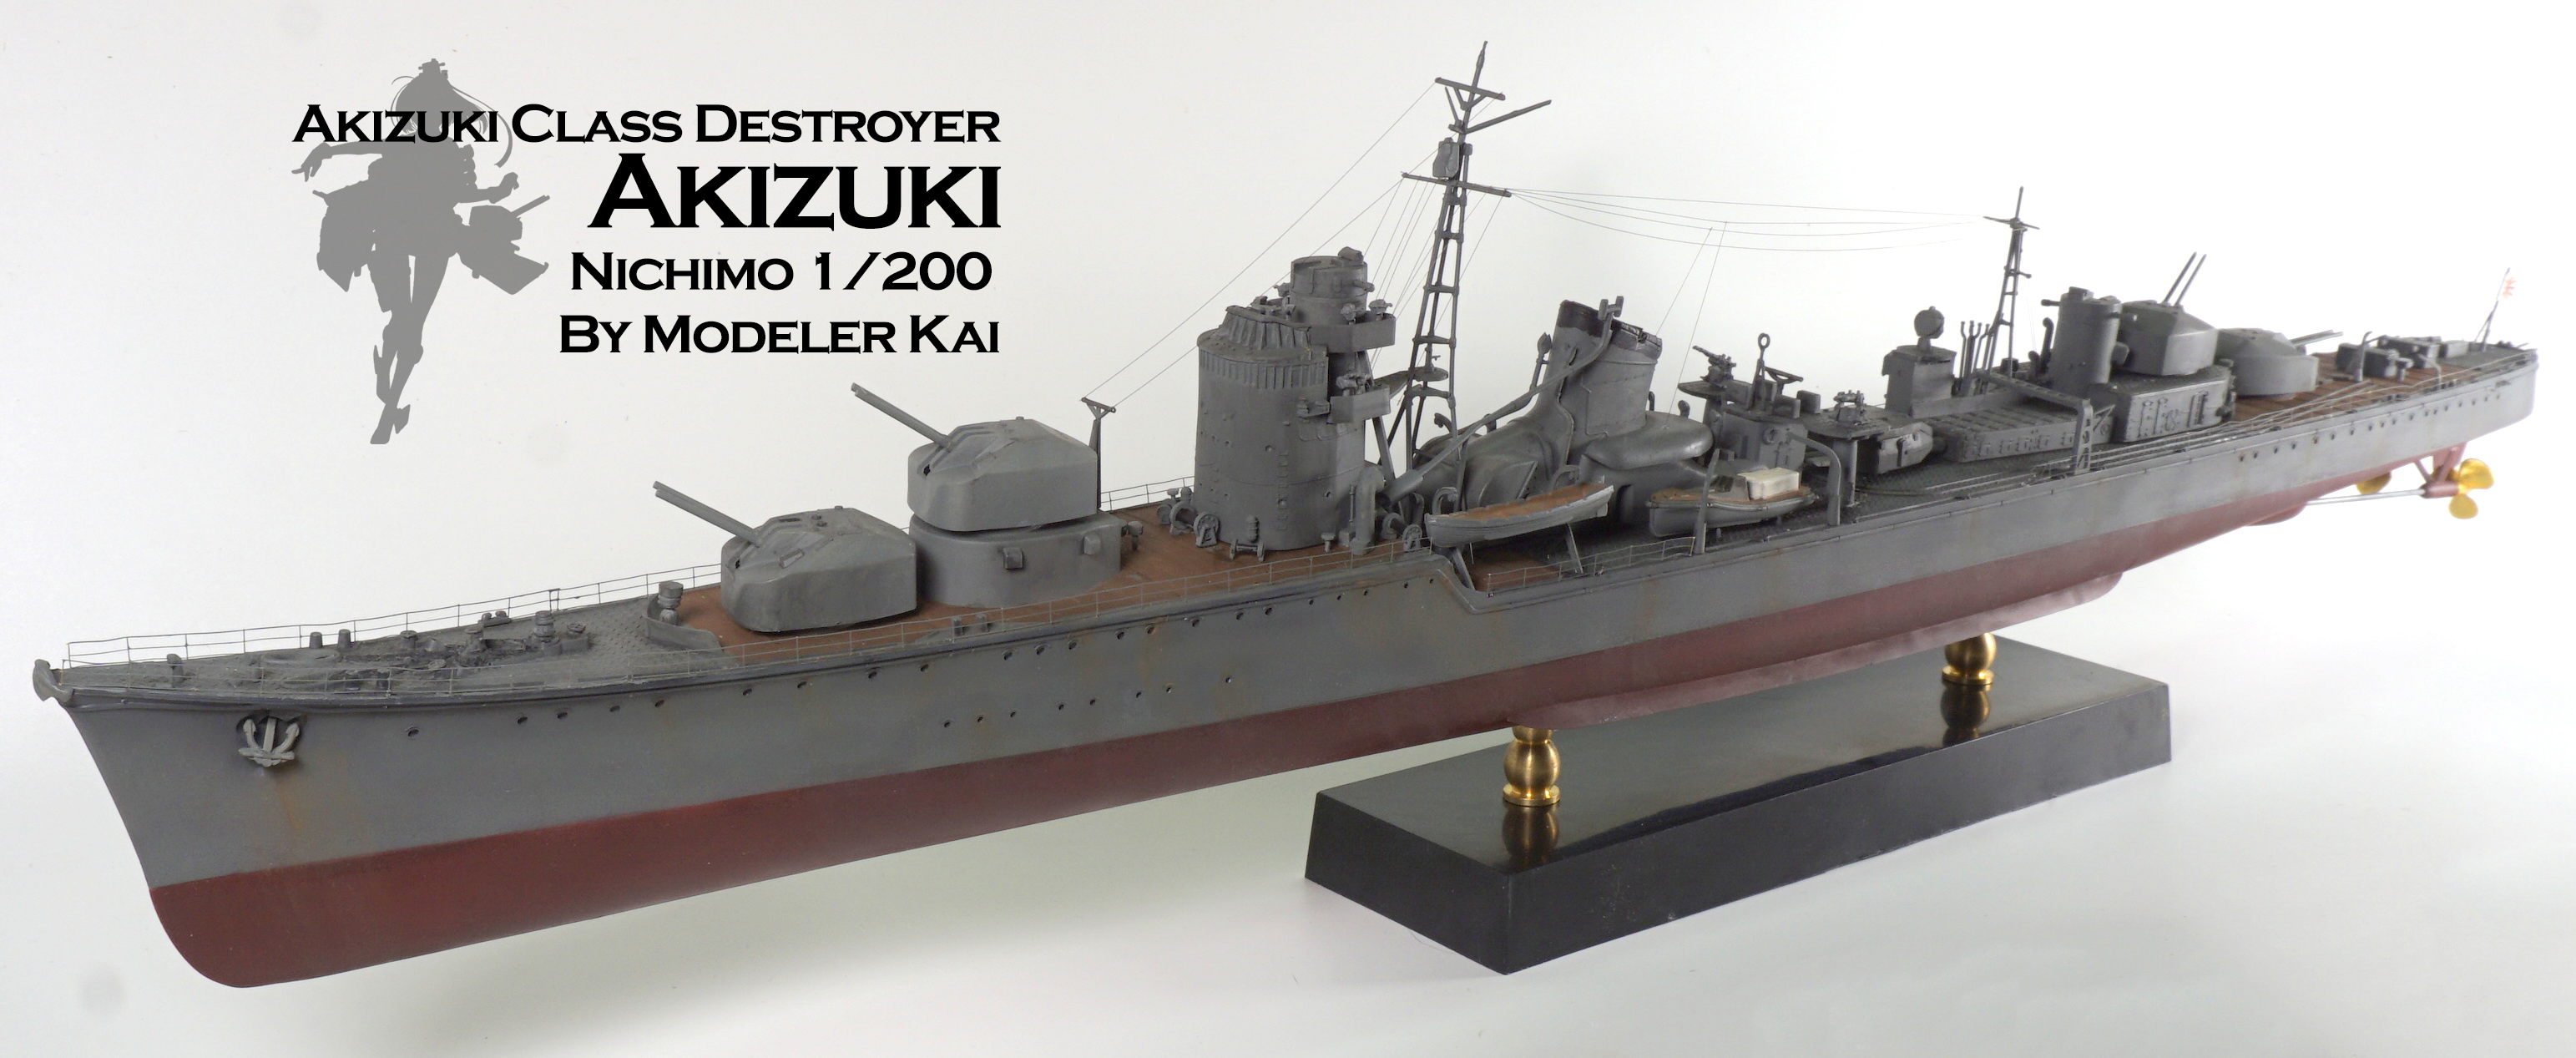 Nichimo 1/200 Kit Japanese Naval Vessel type destroyer Shiranui Unassembled 